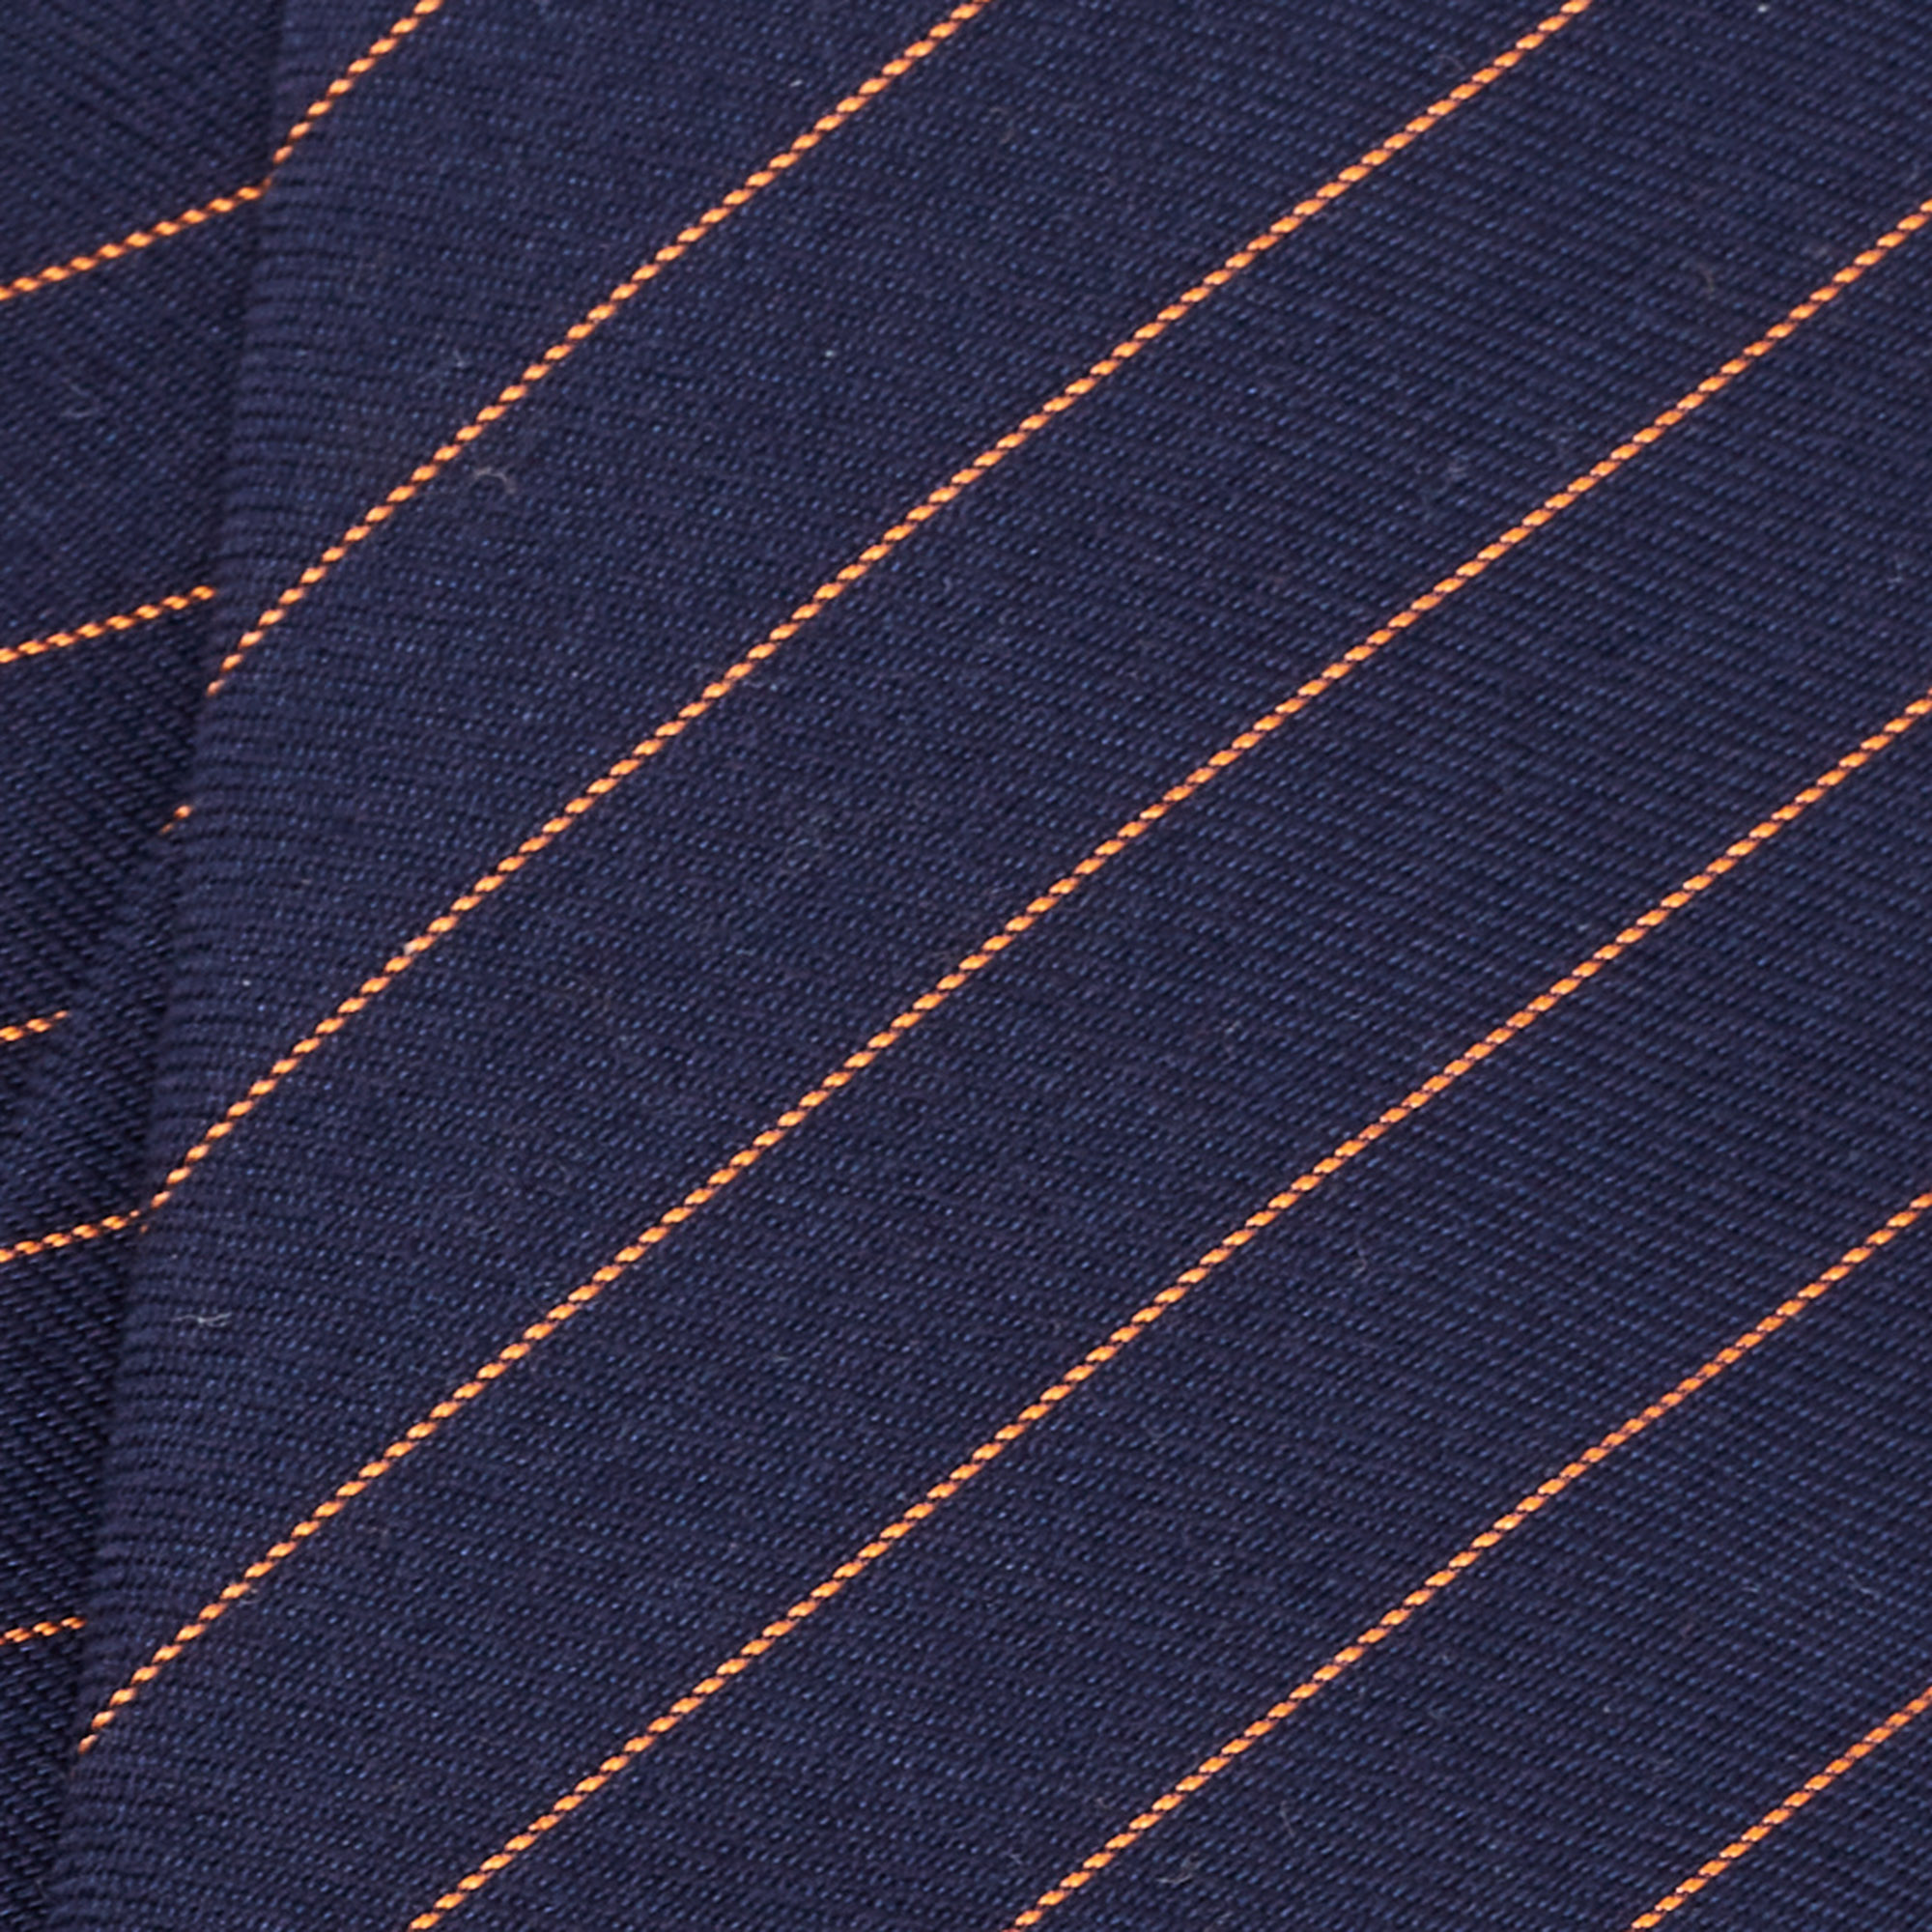 

Hermes Blue and Orange Diagonal Striped Wool and Silk Tie